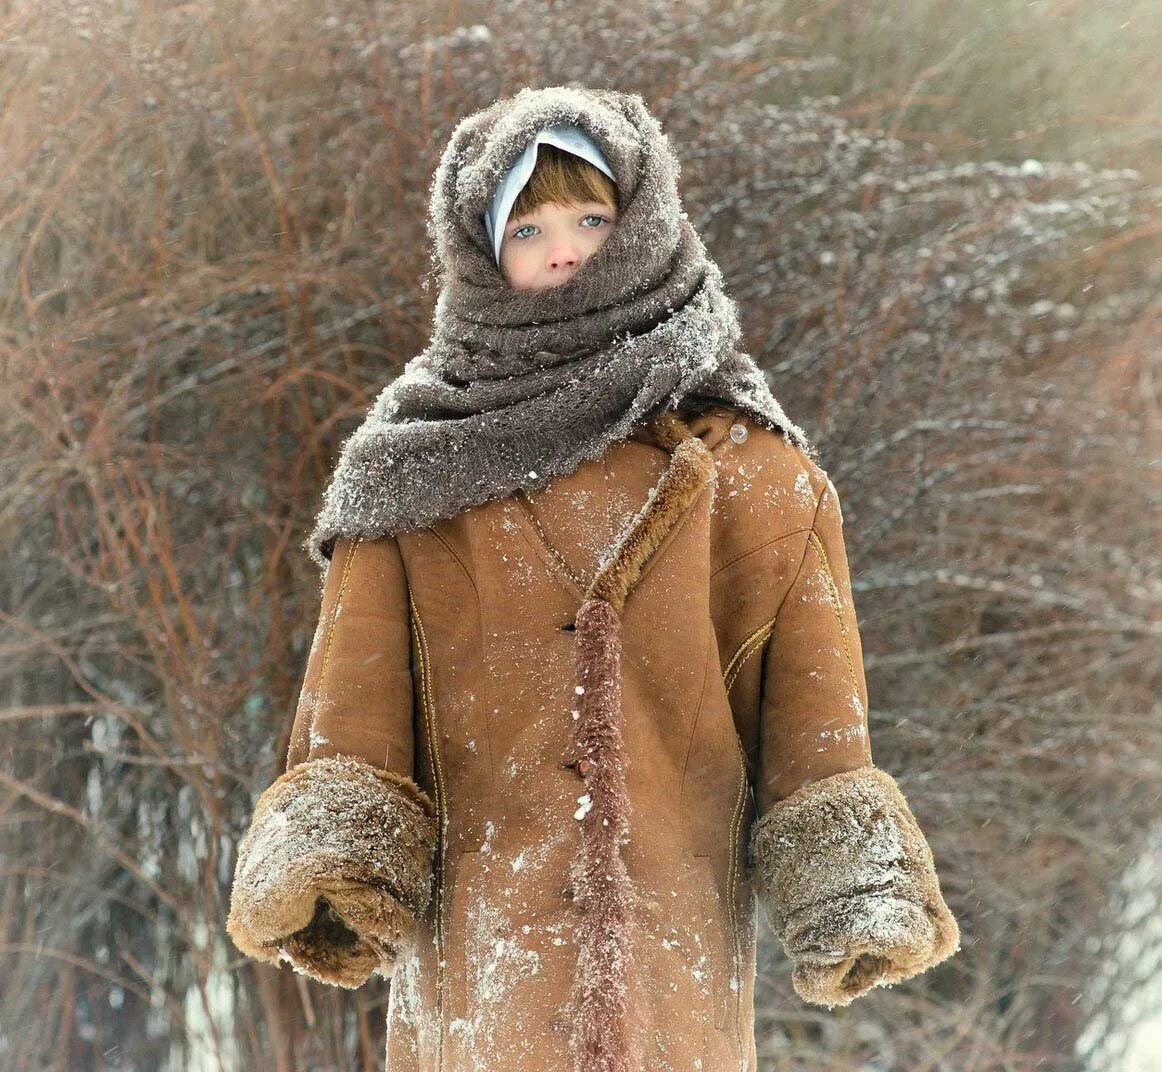 Дети одевались потеплее. Тепло одетый. Тепло одетый человек. Тепло одетый ребенок. Девушка очень тепло одета.